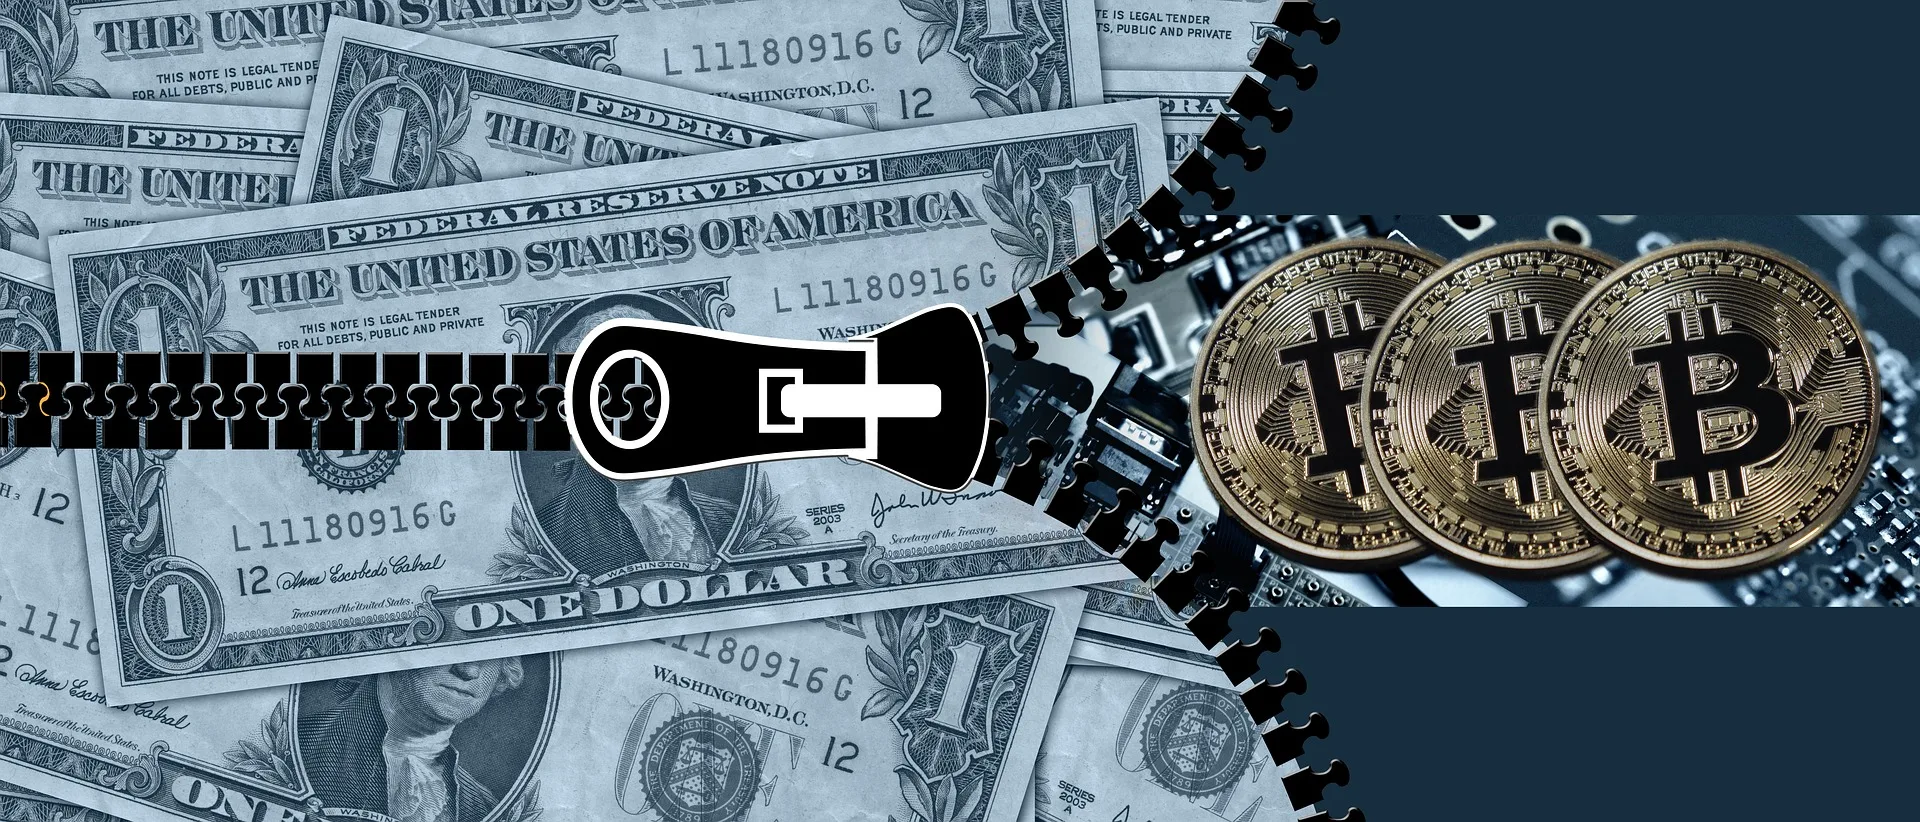 bitcoinovy milionar zariadil peniaze padali neba zatknuty hongkong jpg